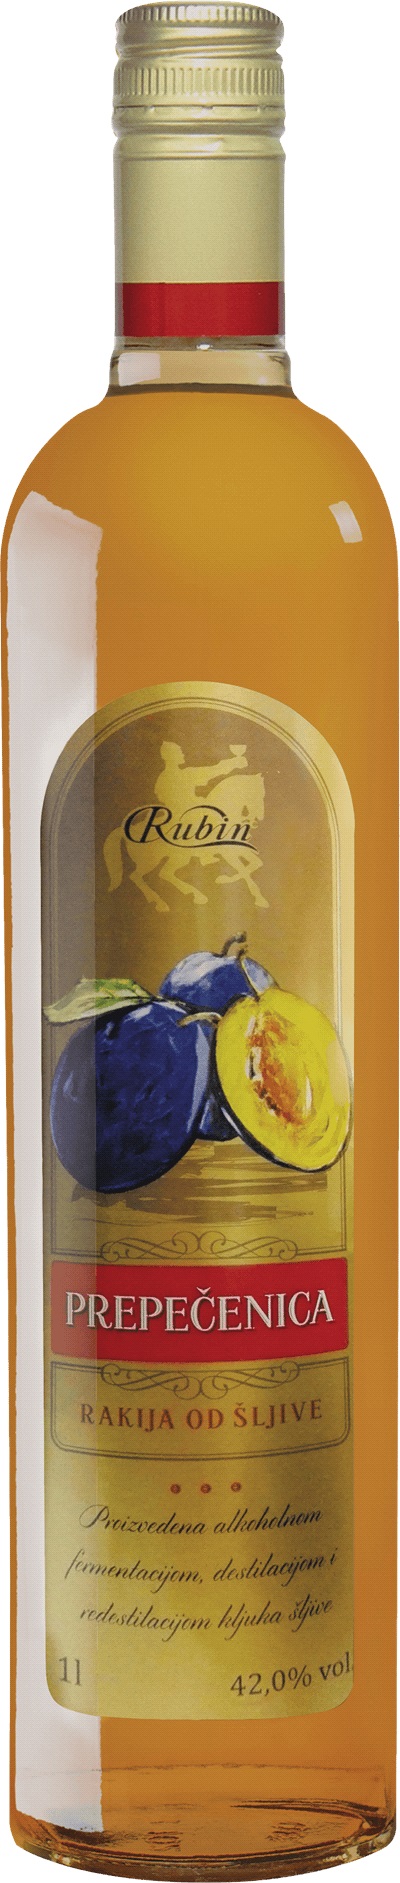 Rubin-prepecenica